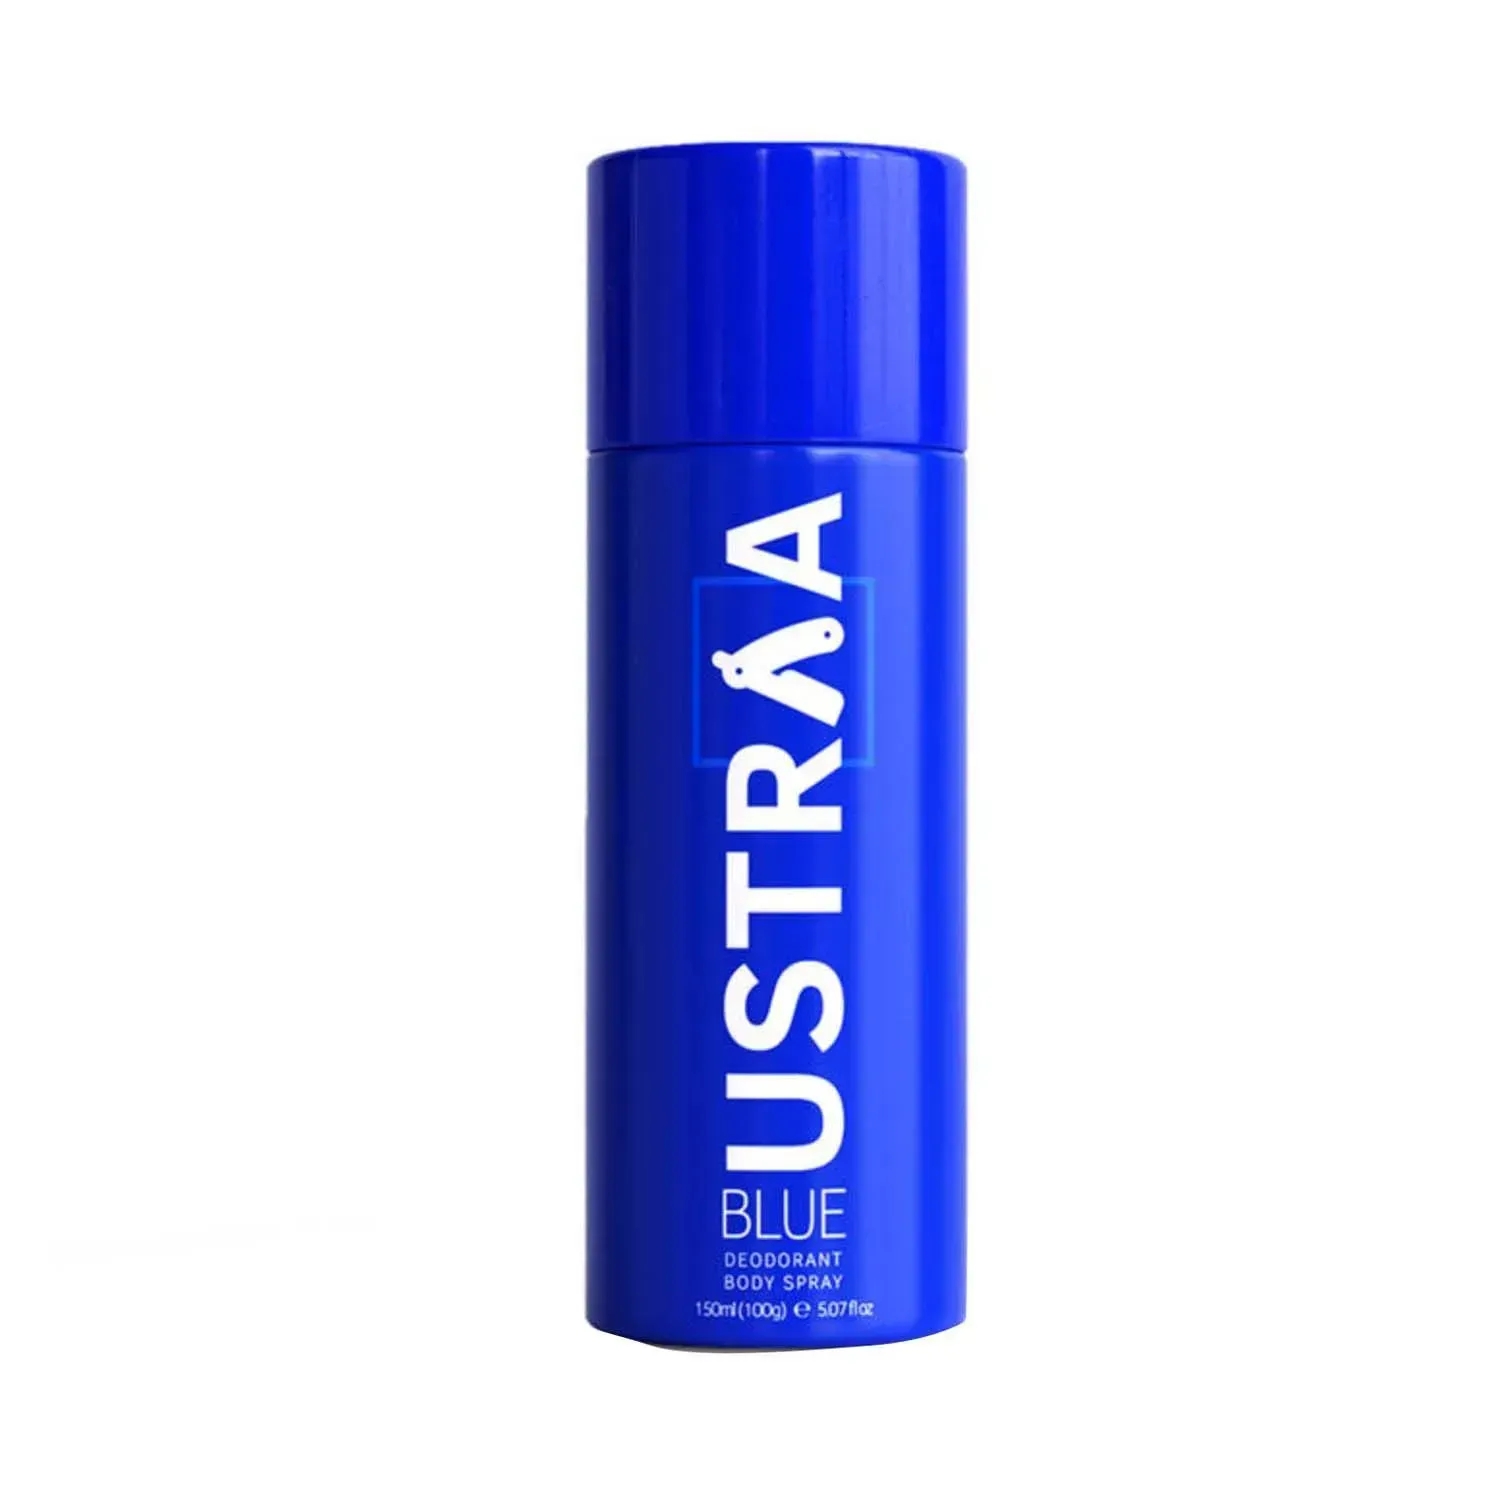 Ustraa | Ustraa Blue Deodorant Body Spray - (150ml)